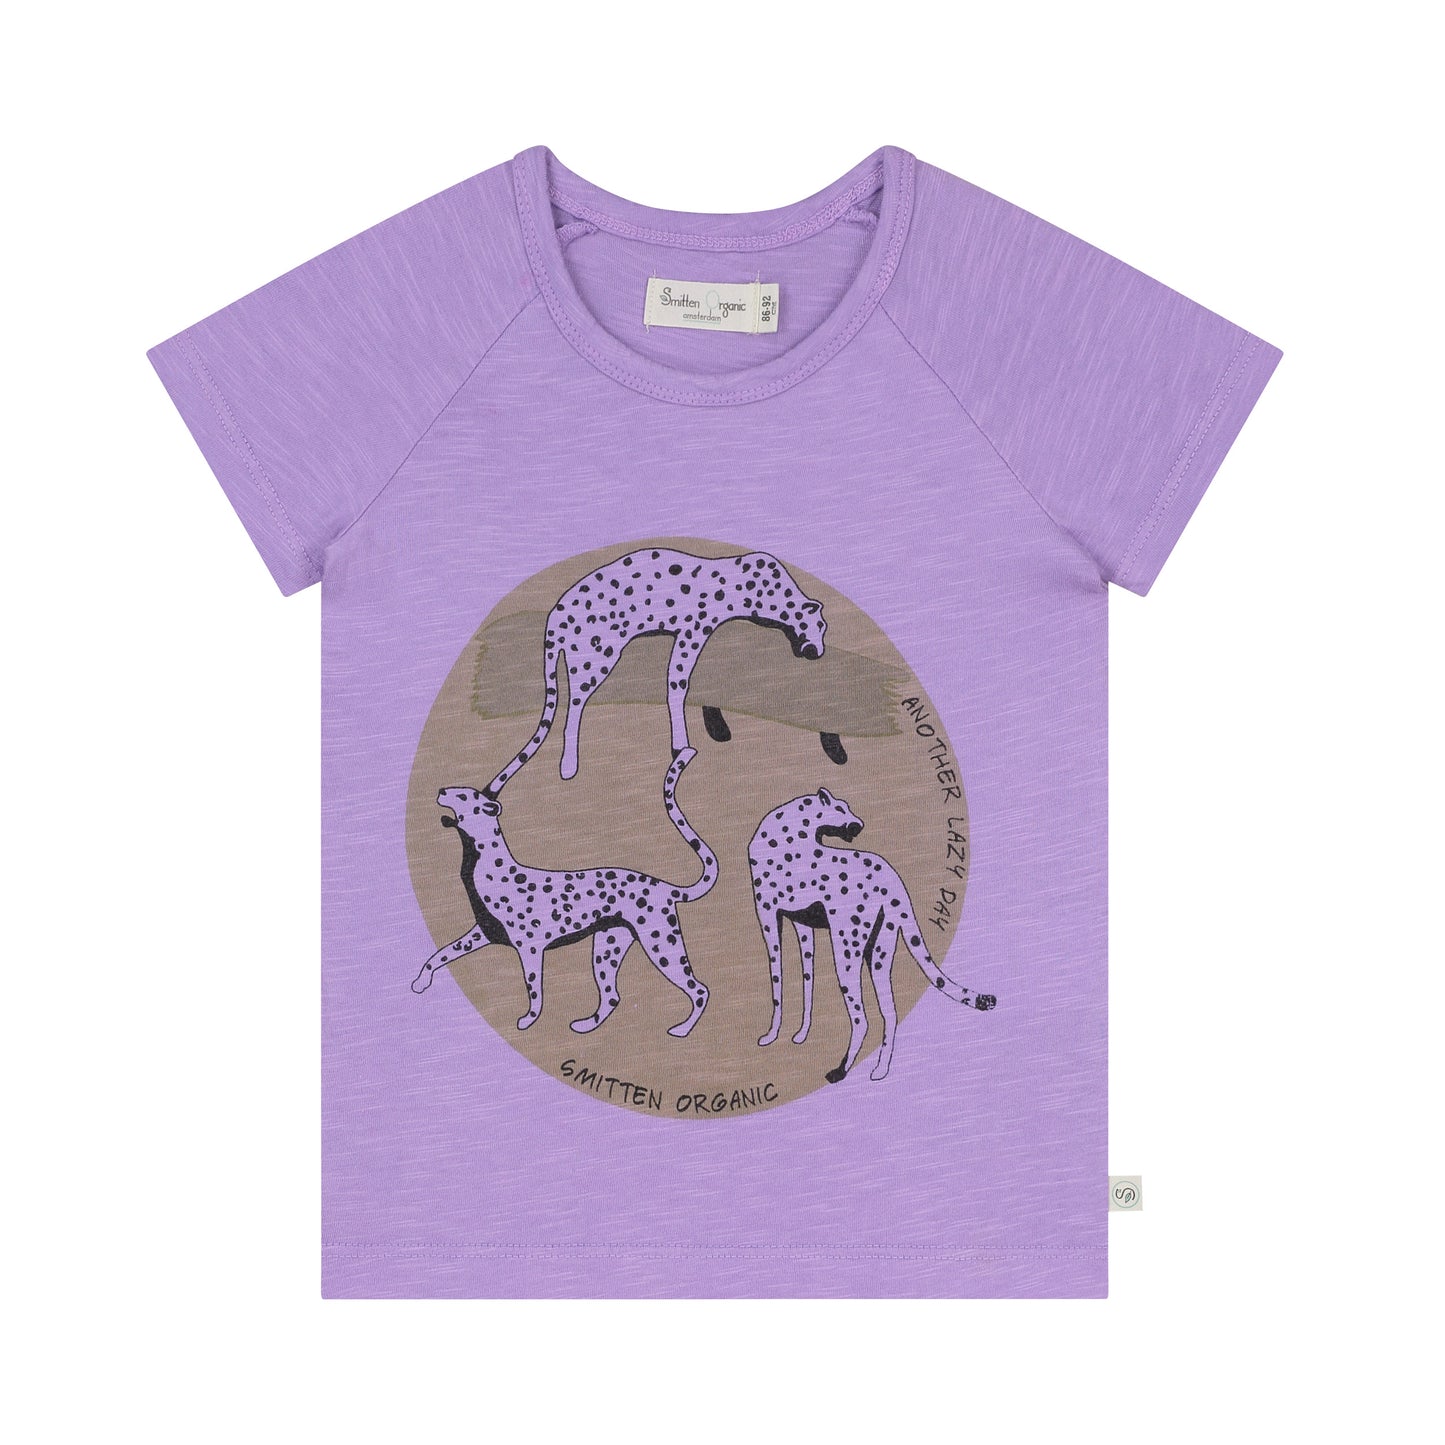 Leap of leopard lying at acacia tree short sleeve purple T-shirt